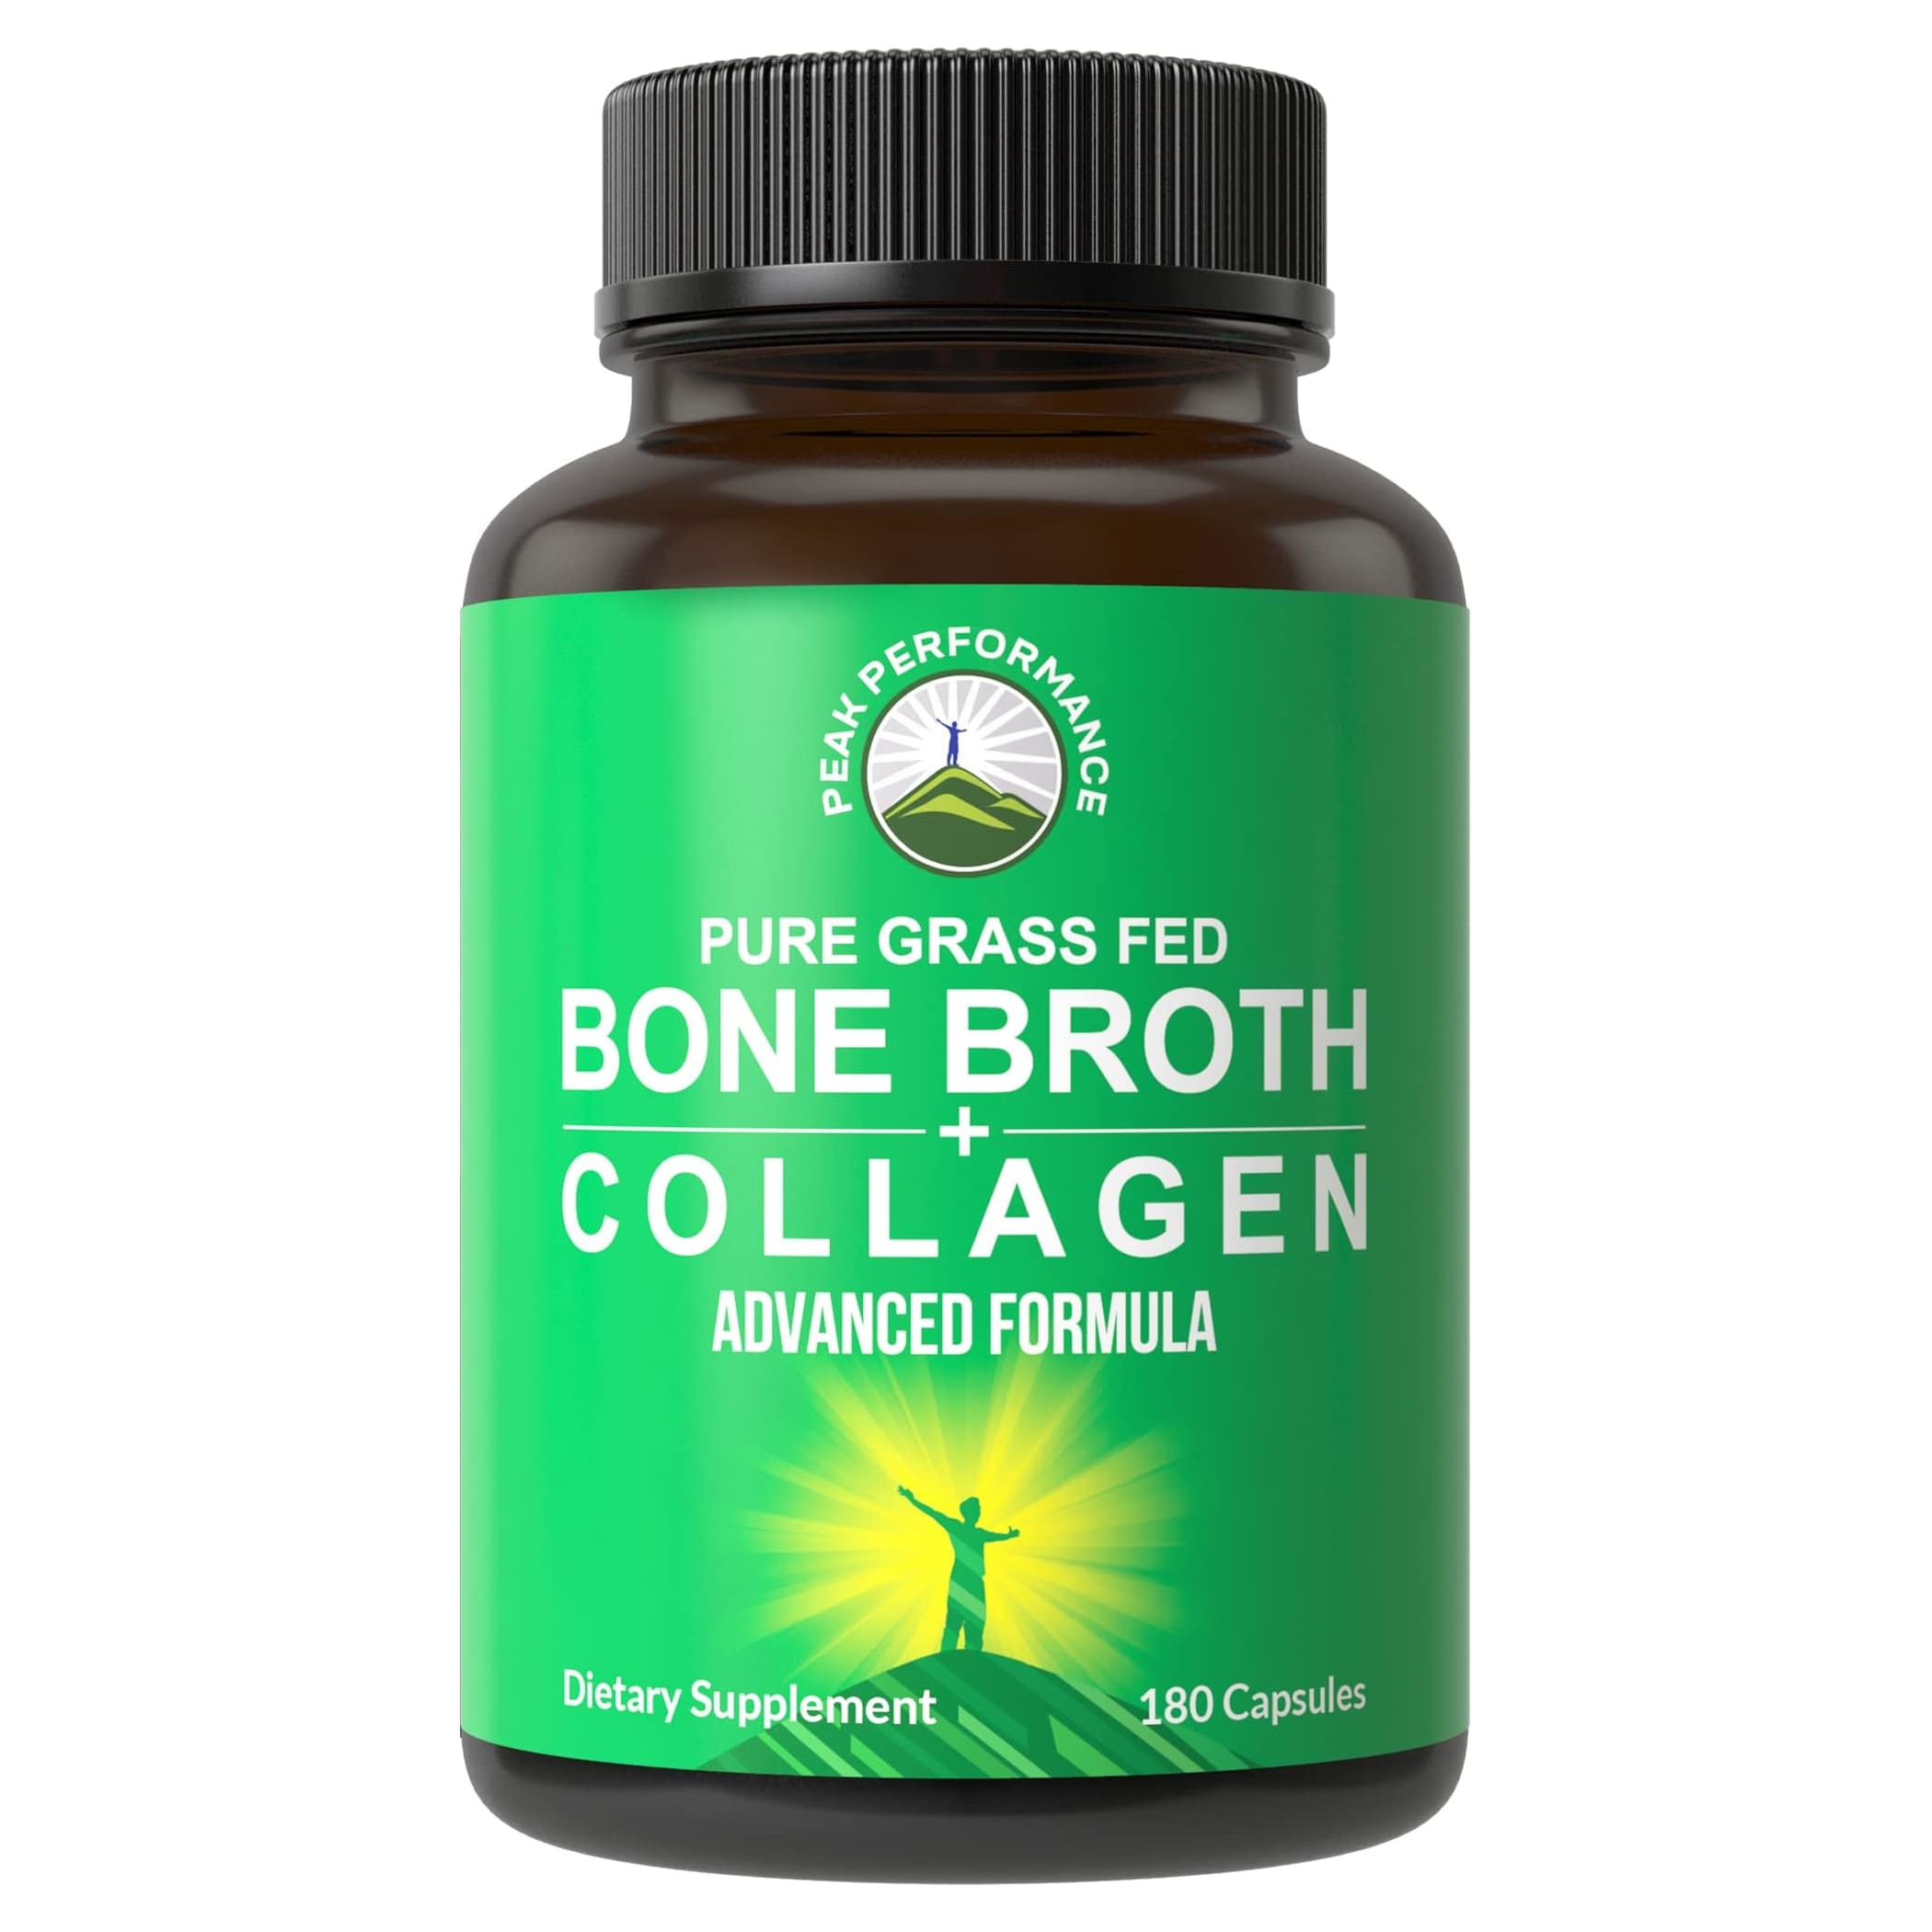 Коллаген Peak Performance Bone Broth + Type I, III, 180 капсул uc ii now foods добавка для здоровья суставов неденатурированный коллаген типа ii